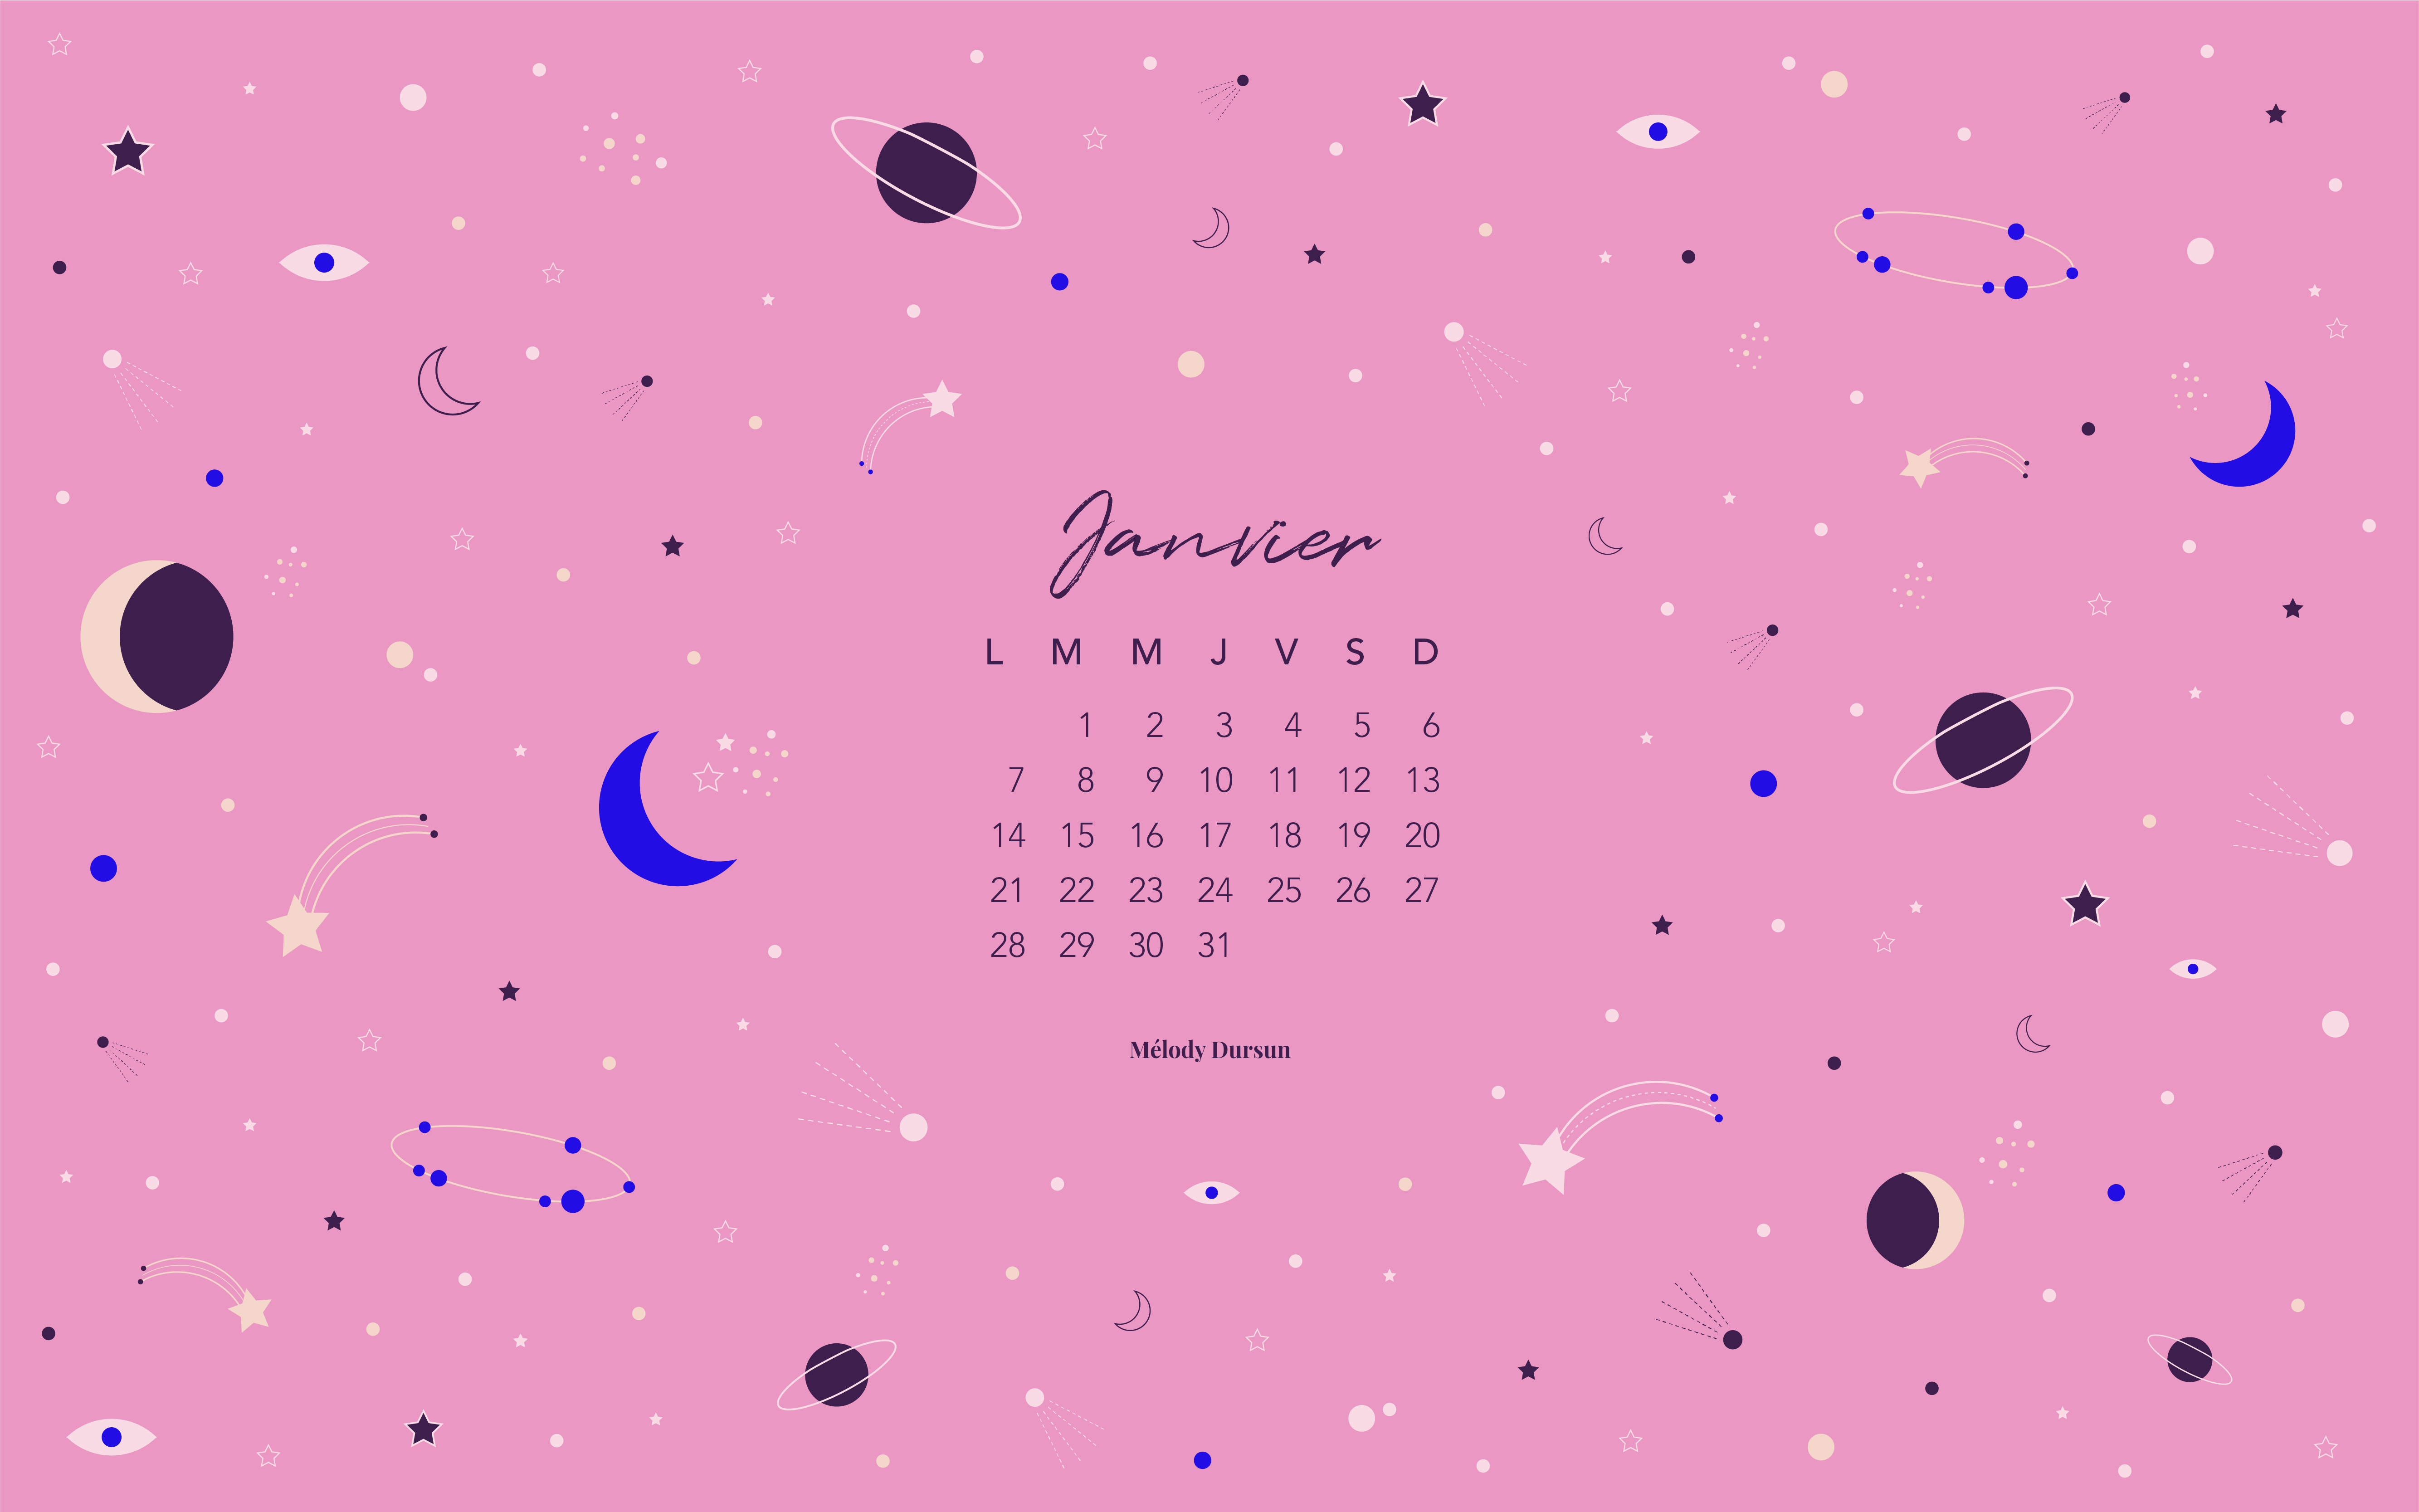 melodydursun-calendrier-janvier2019-pink-1